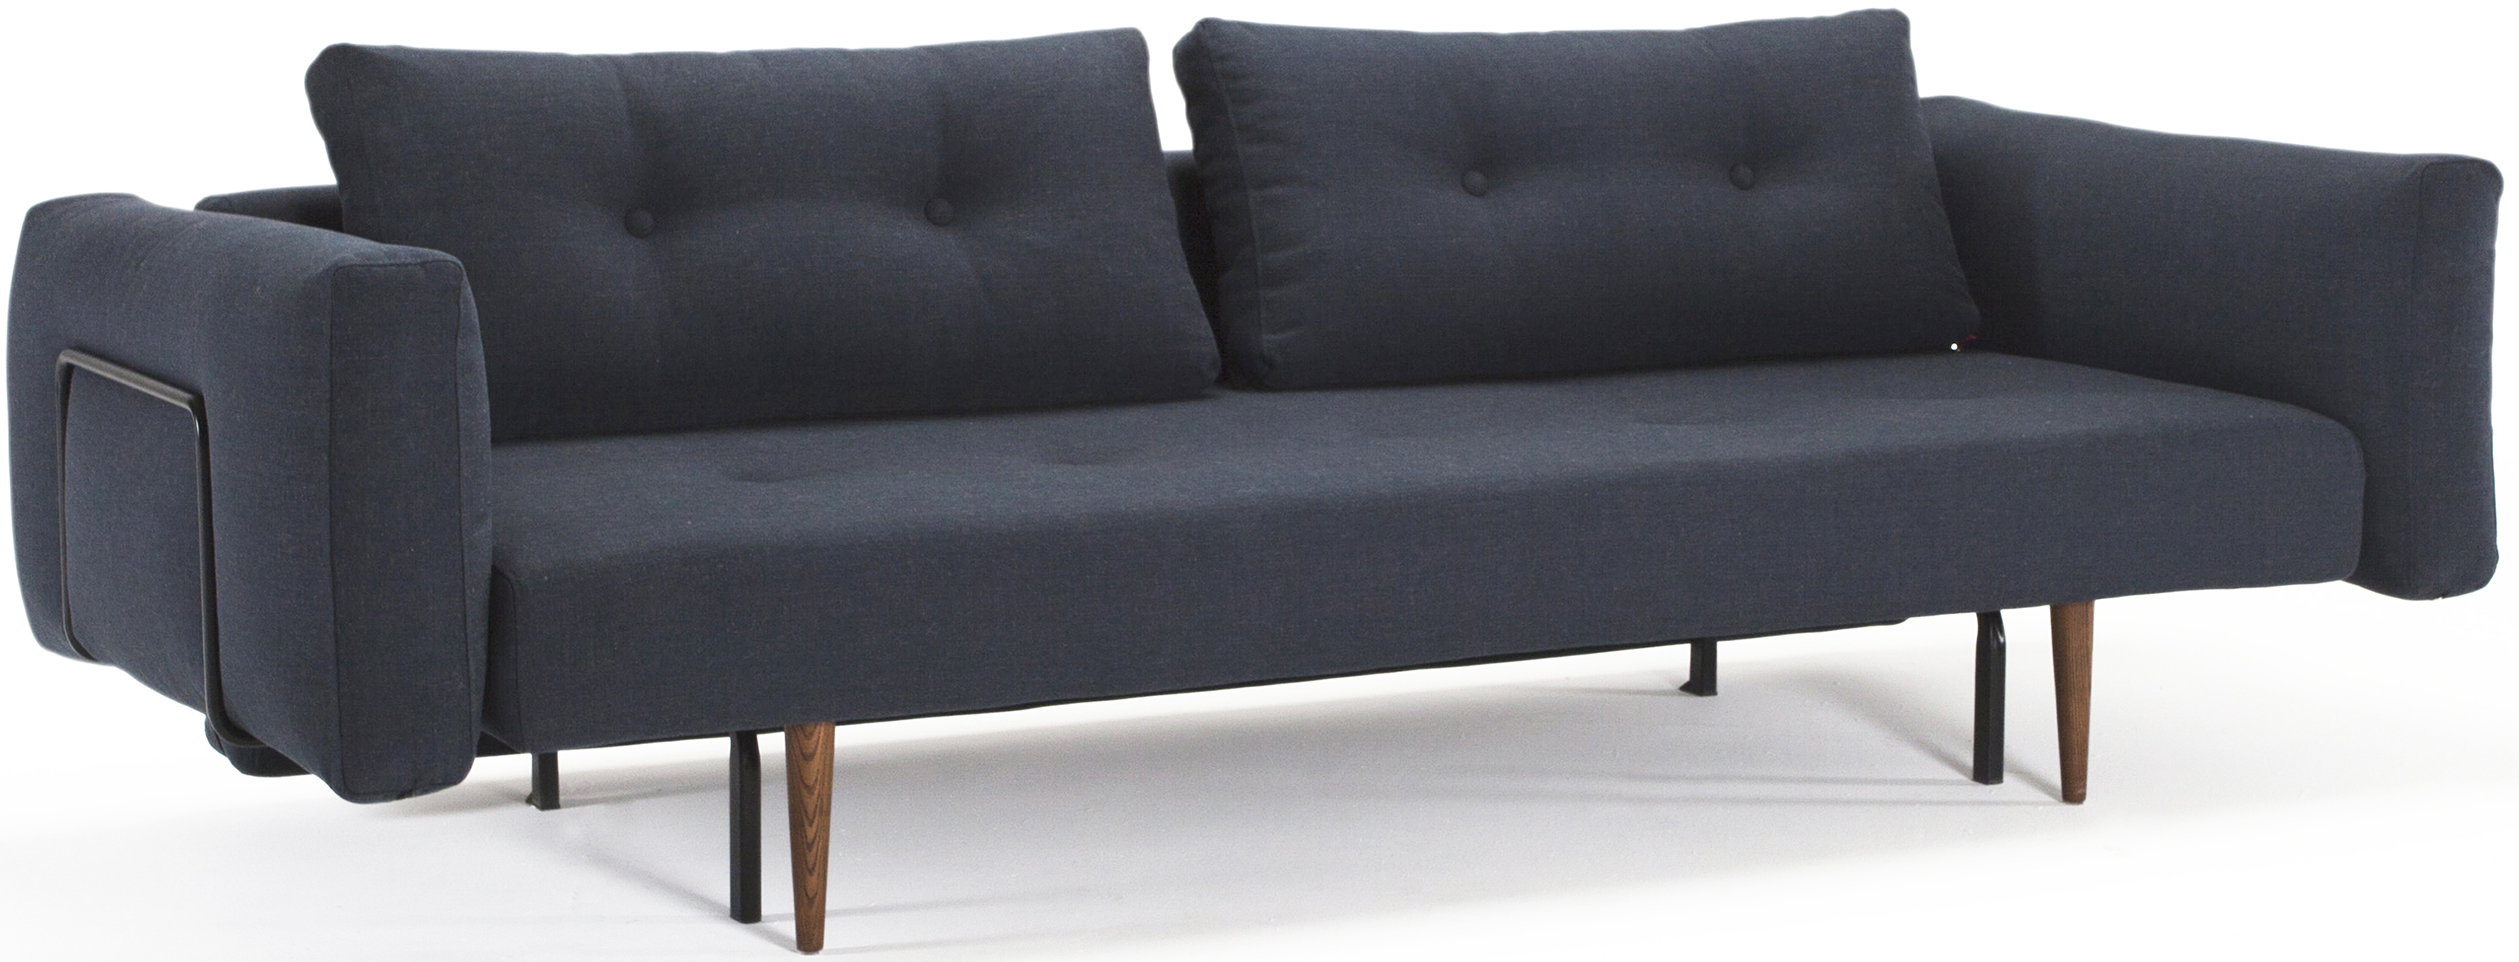 innovation recast plust sofa bed